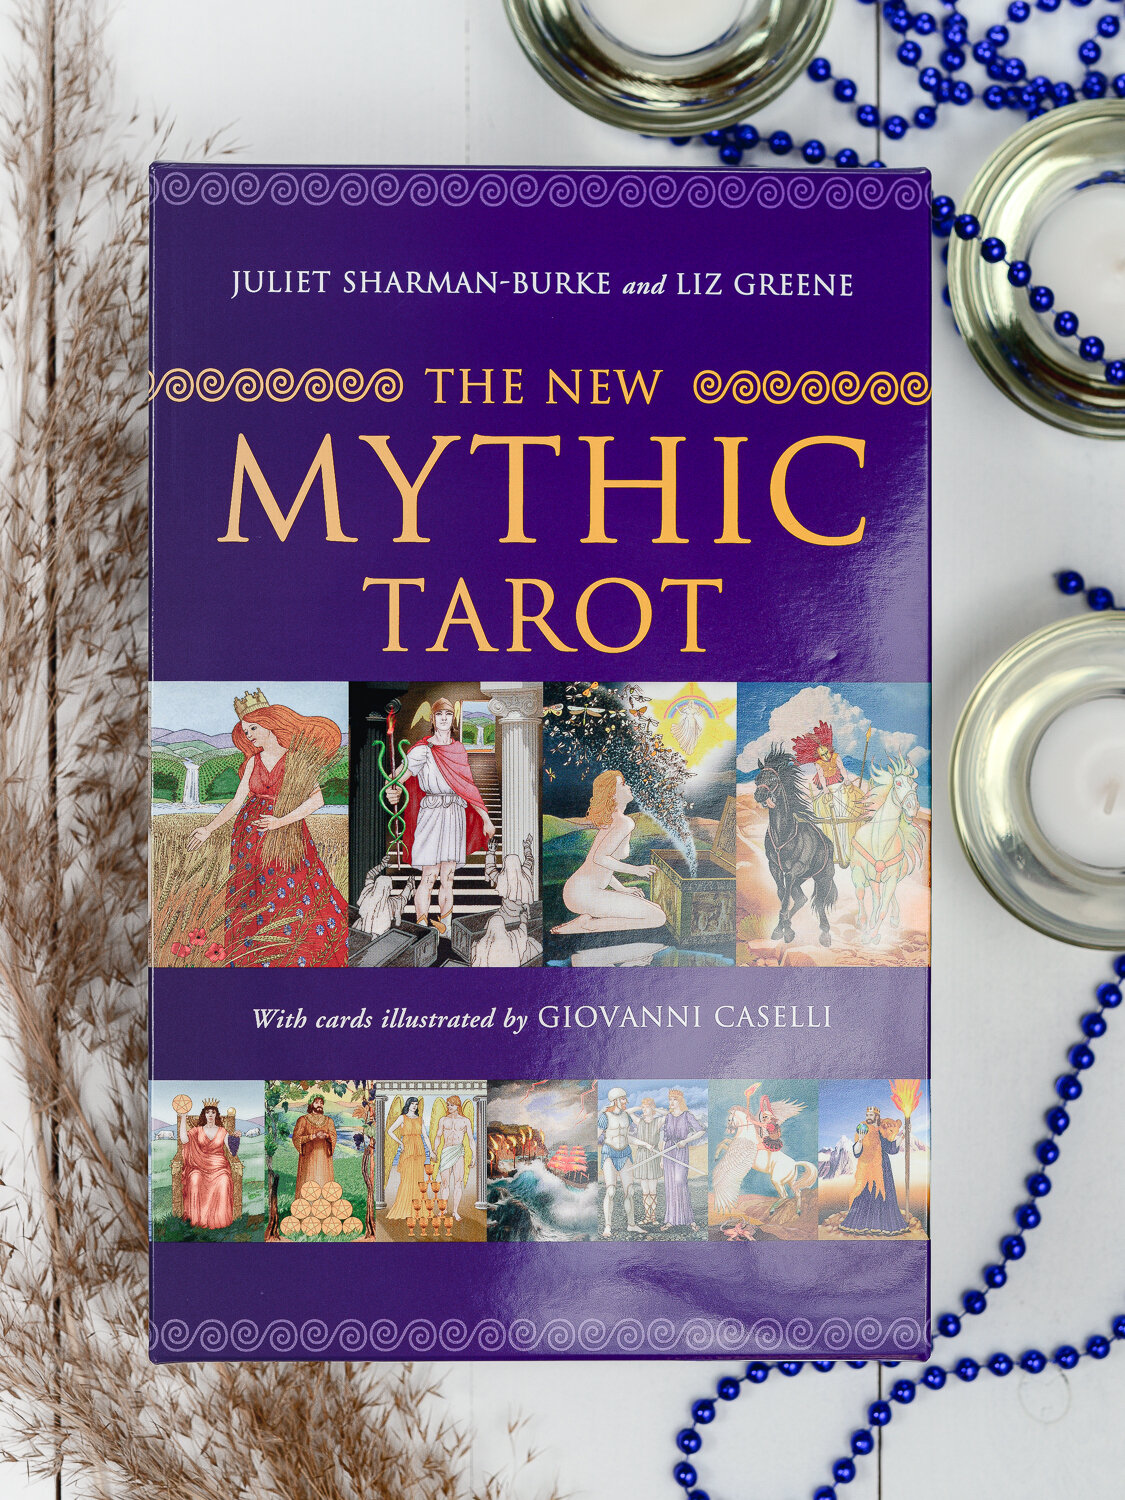 Mythic Tarot (Джульетта Шарман-Берк (Juliet Sharman-Burke), Лиз Грин (Liz Greene) и Триша Ньюэлл (Tricia Newell)) - фото №10